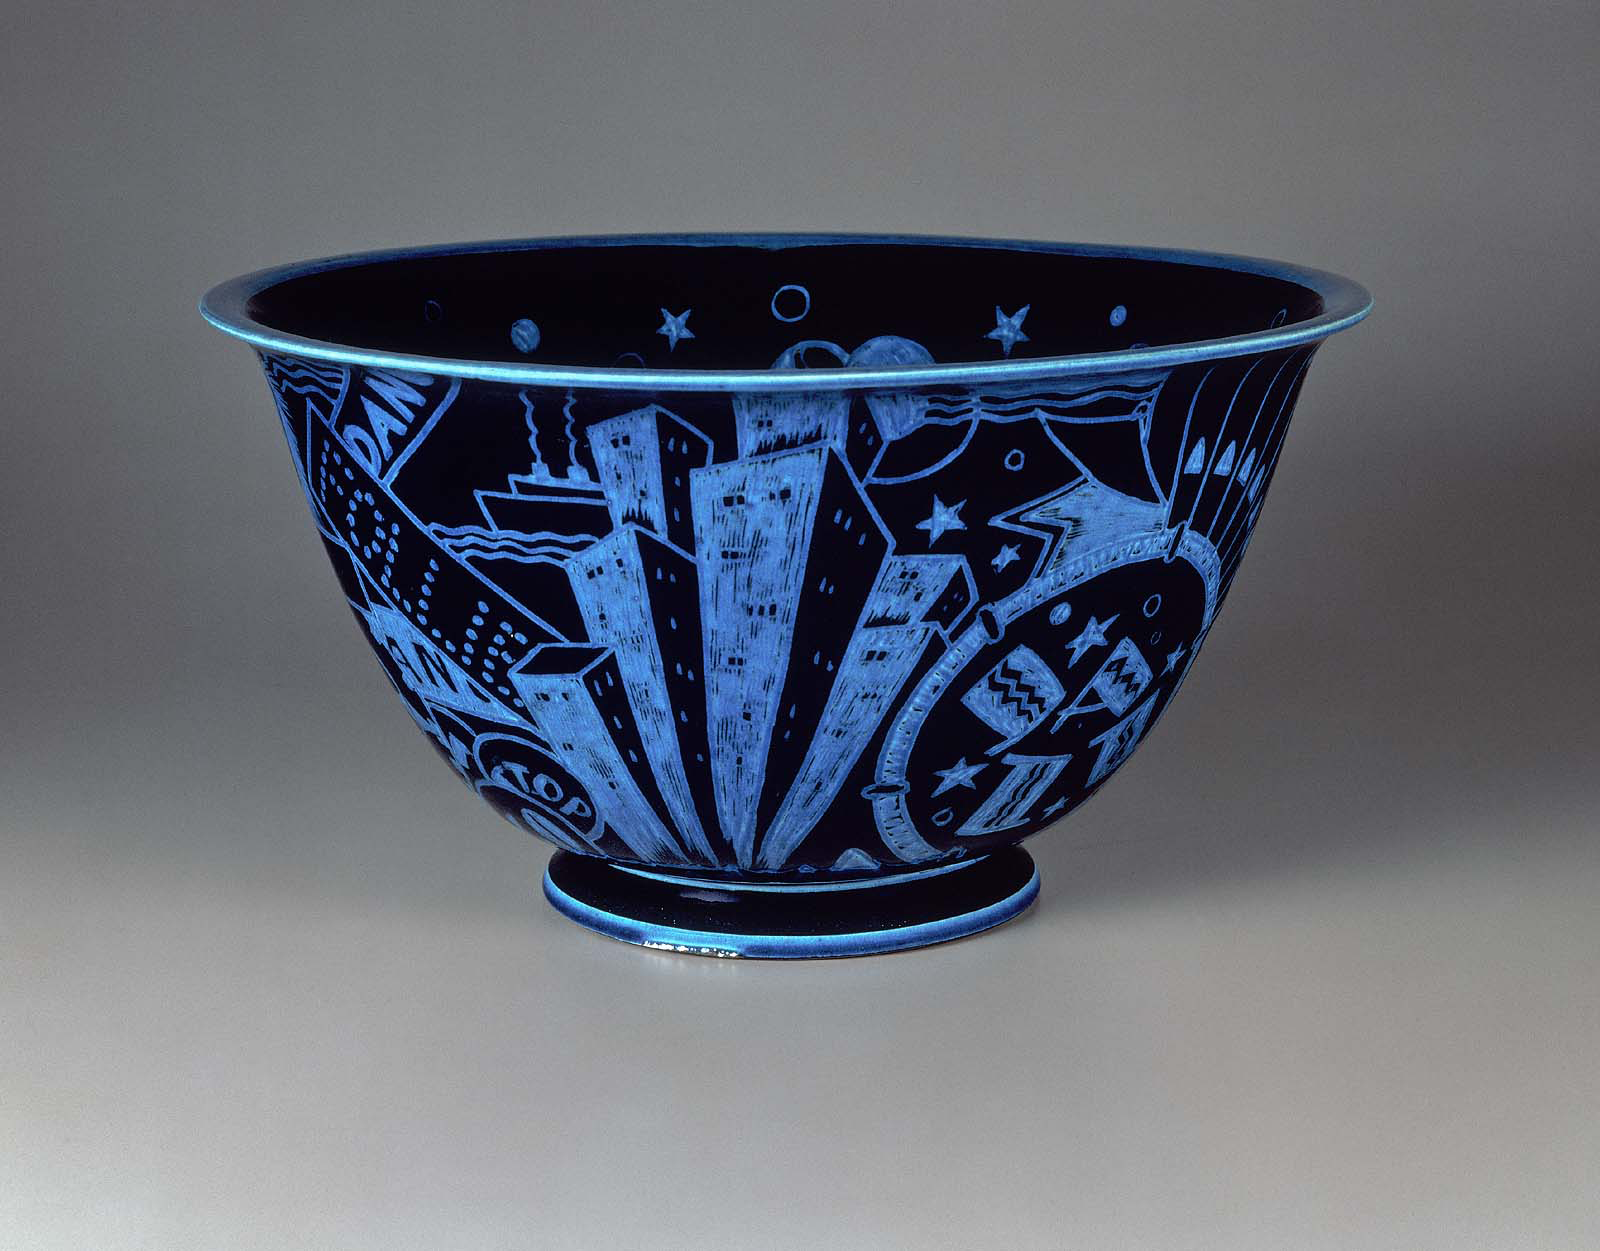 Viktor Schreckengost, Jazz bowl, 1930-31. Glazed porcelain. Museum of Fine Arts, Boston, The John Axelrod Collection. Courtesy of the MFA